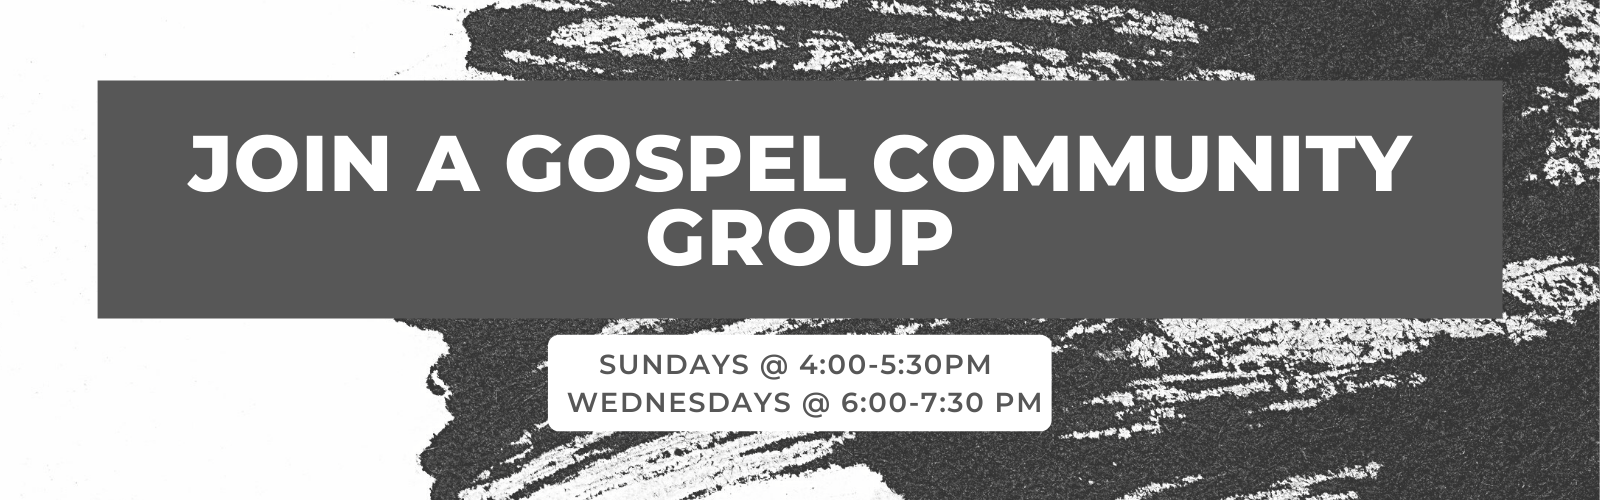 Join a Gospel Community Group